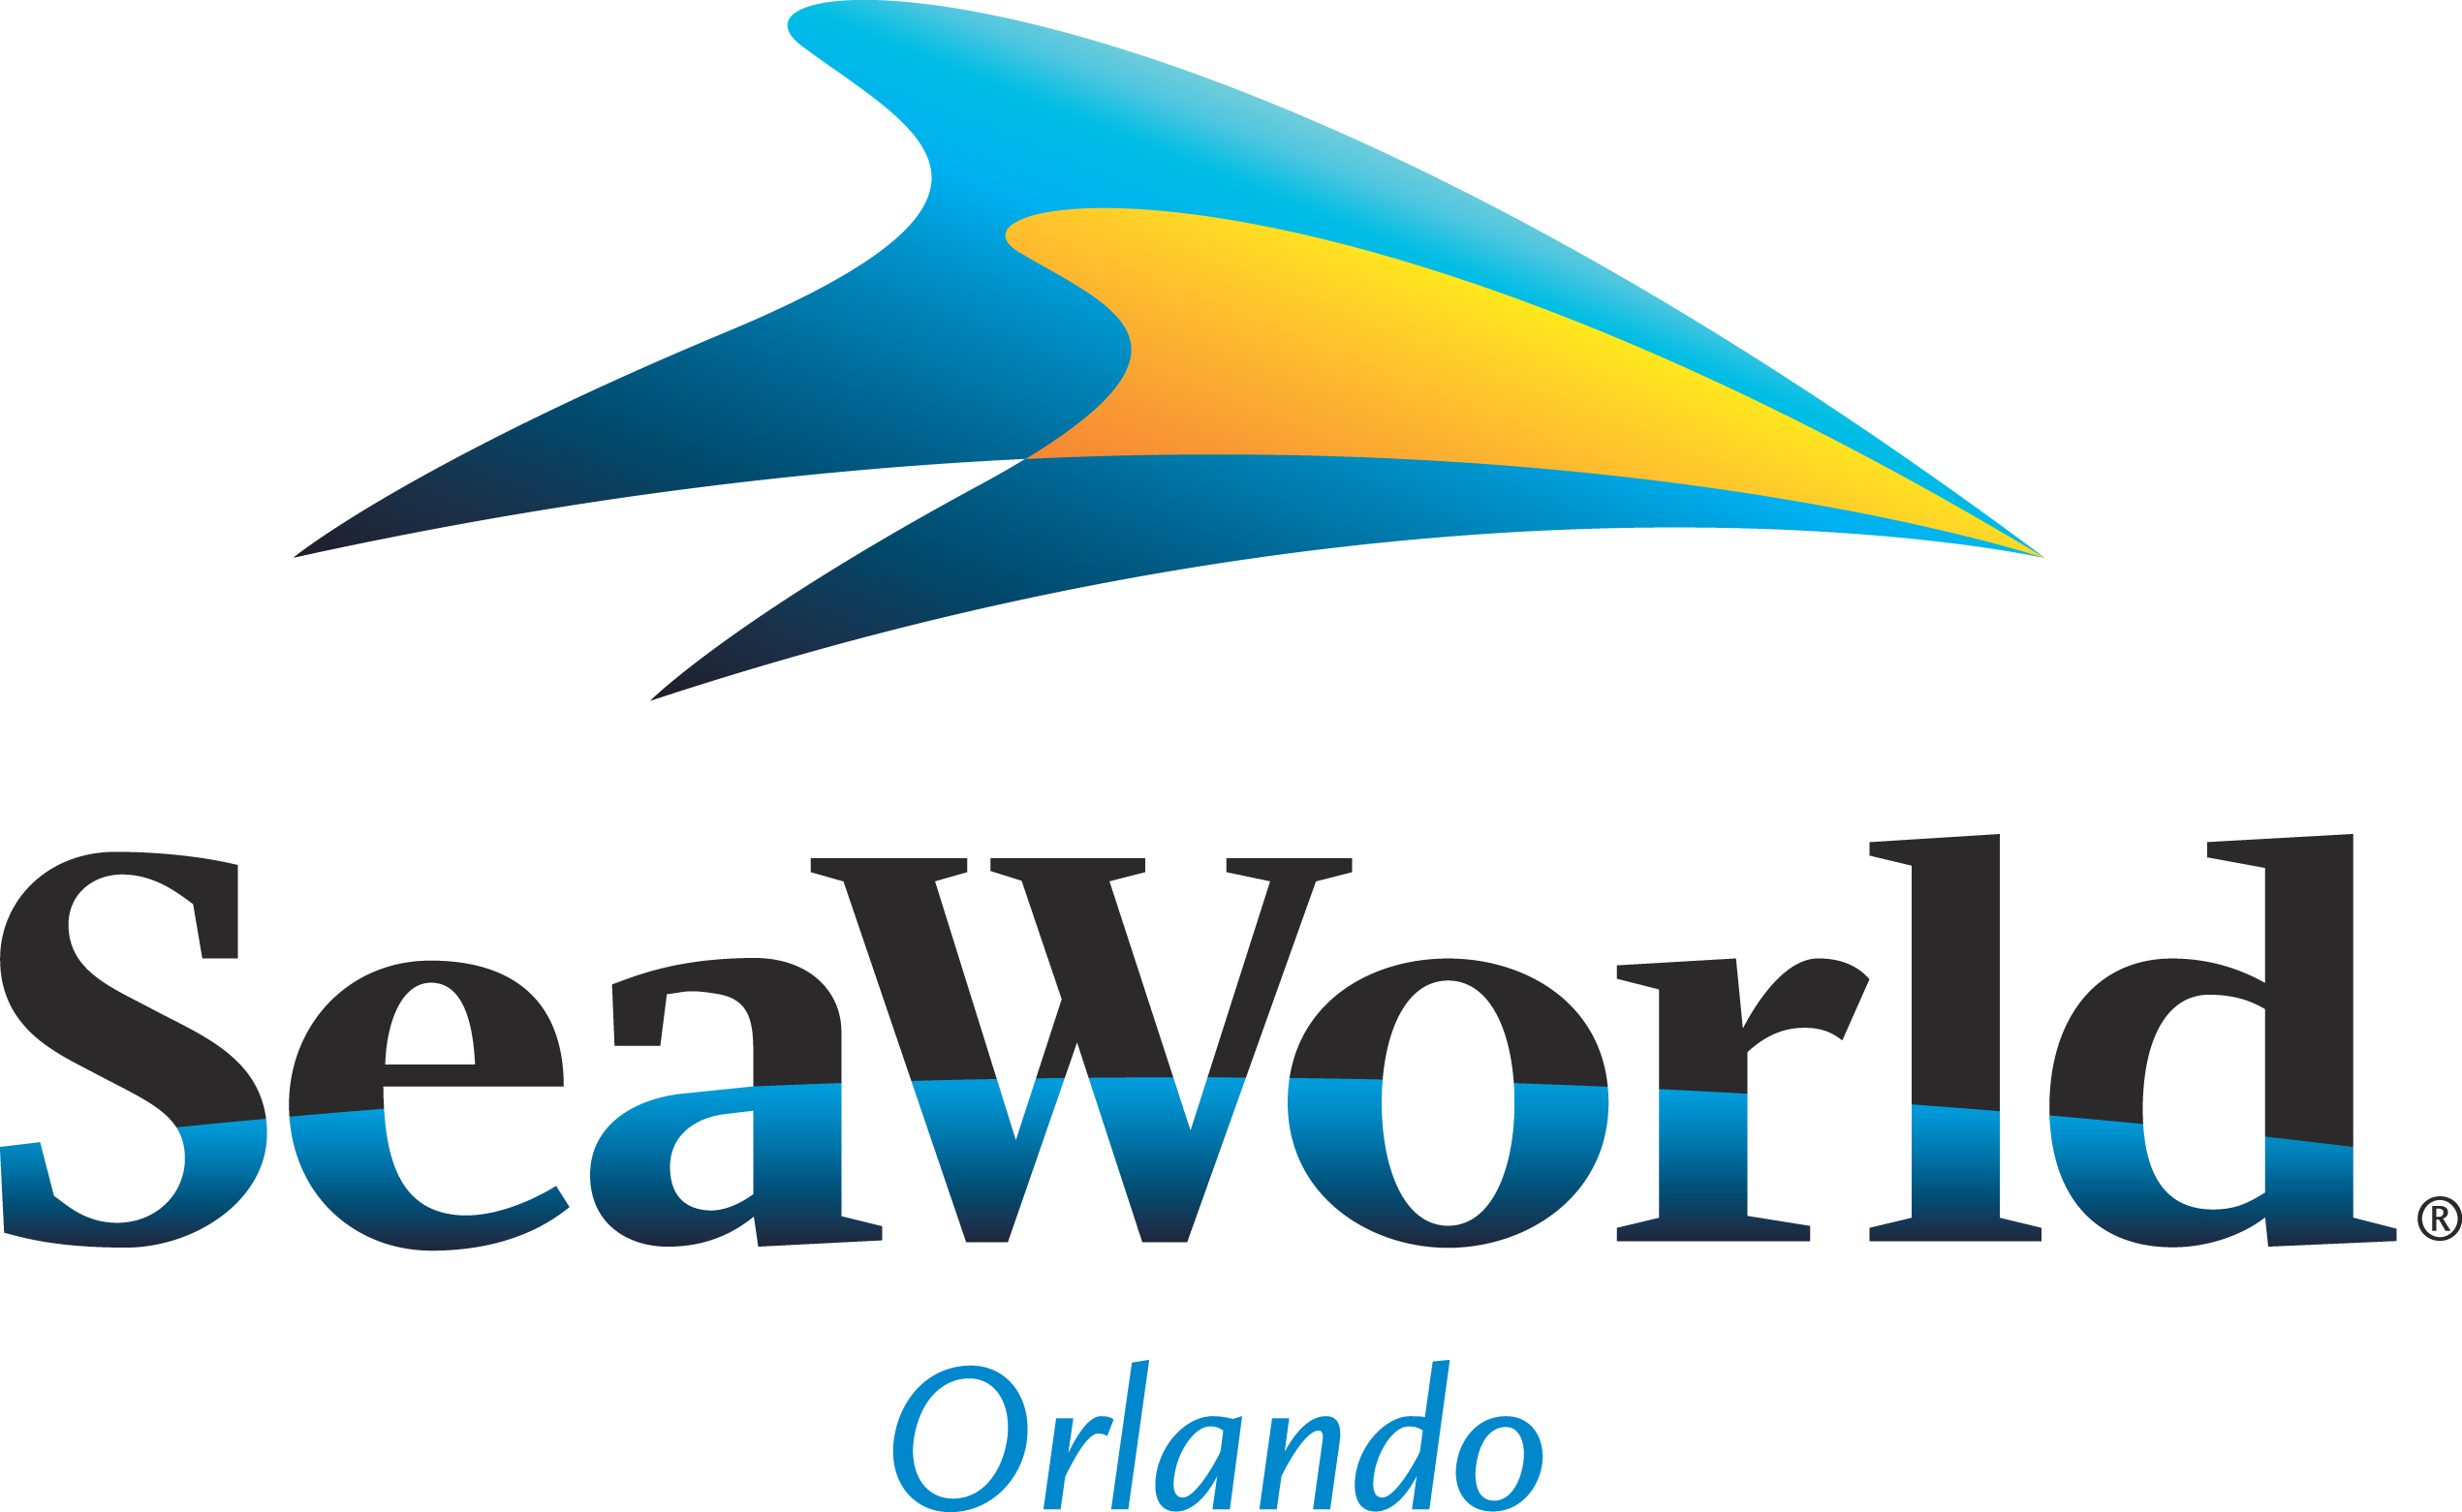 Seaworld orlando logo